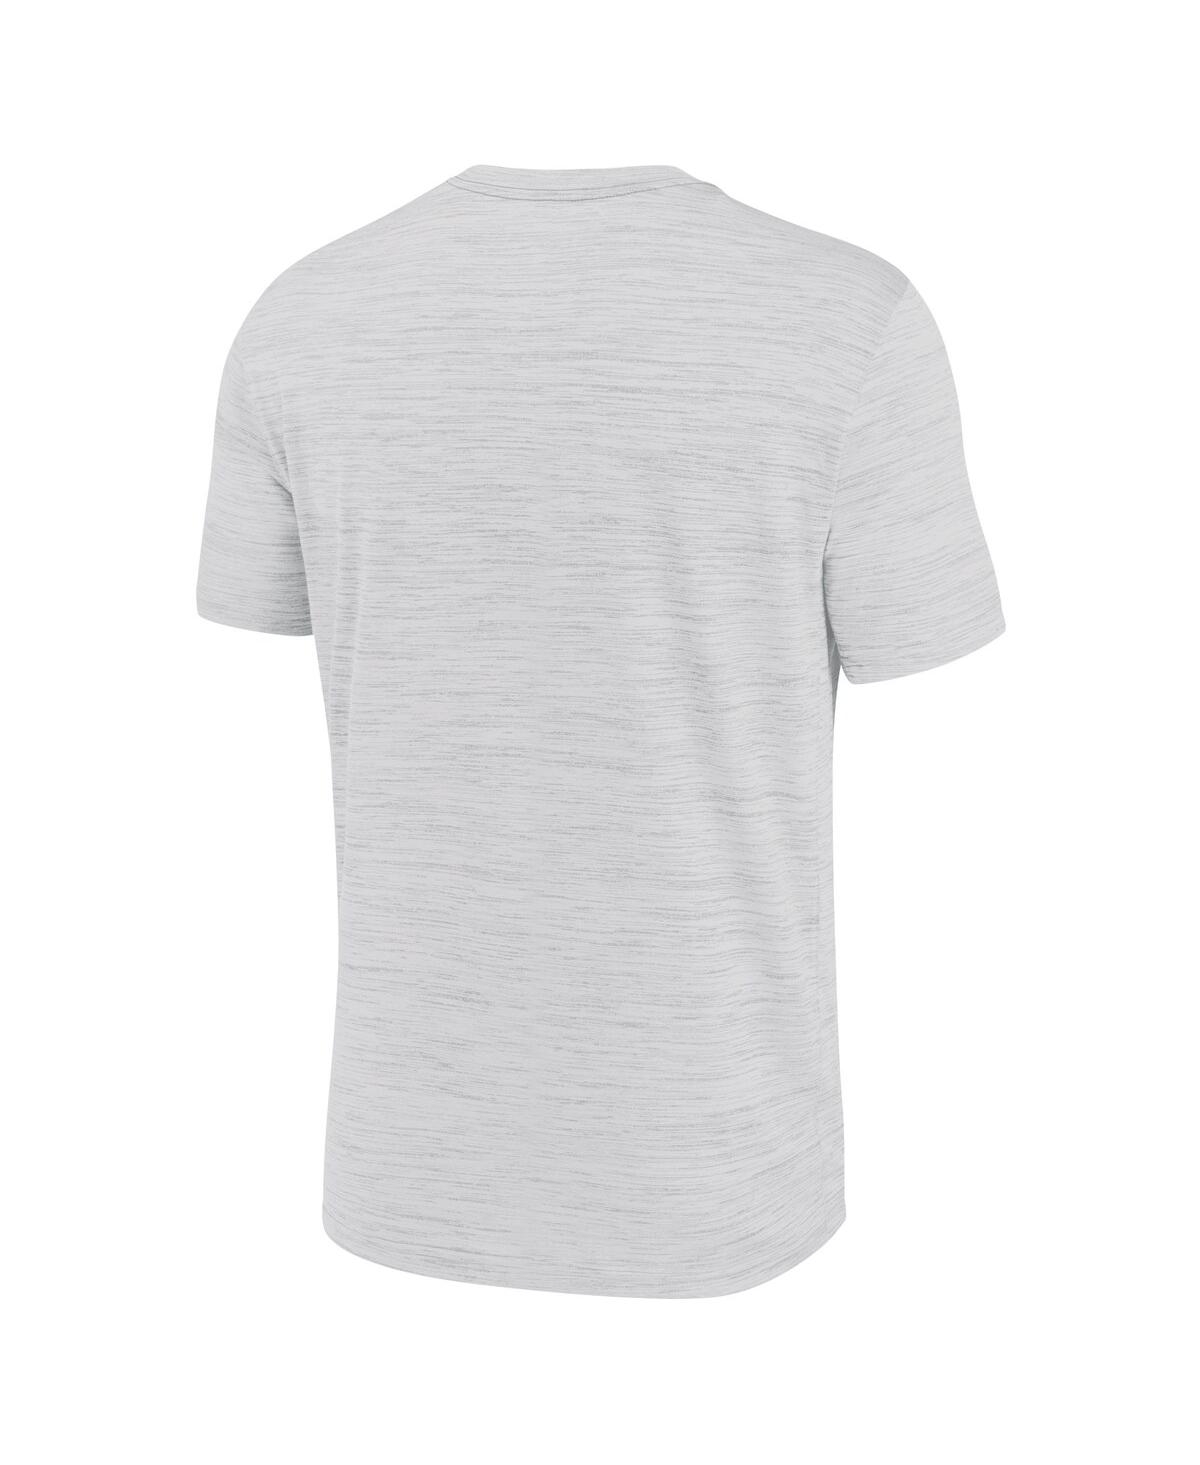 Shop Nike Men's  Gray Los Angeles Dodgers City Connect Velocity Practice Performance T-shirt